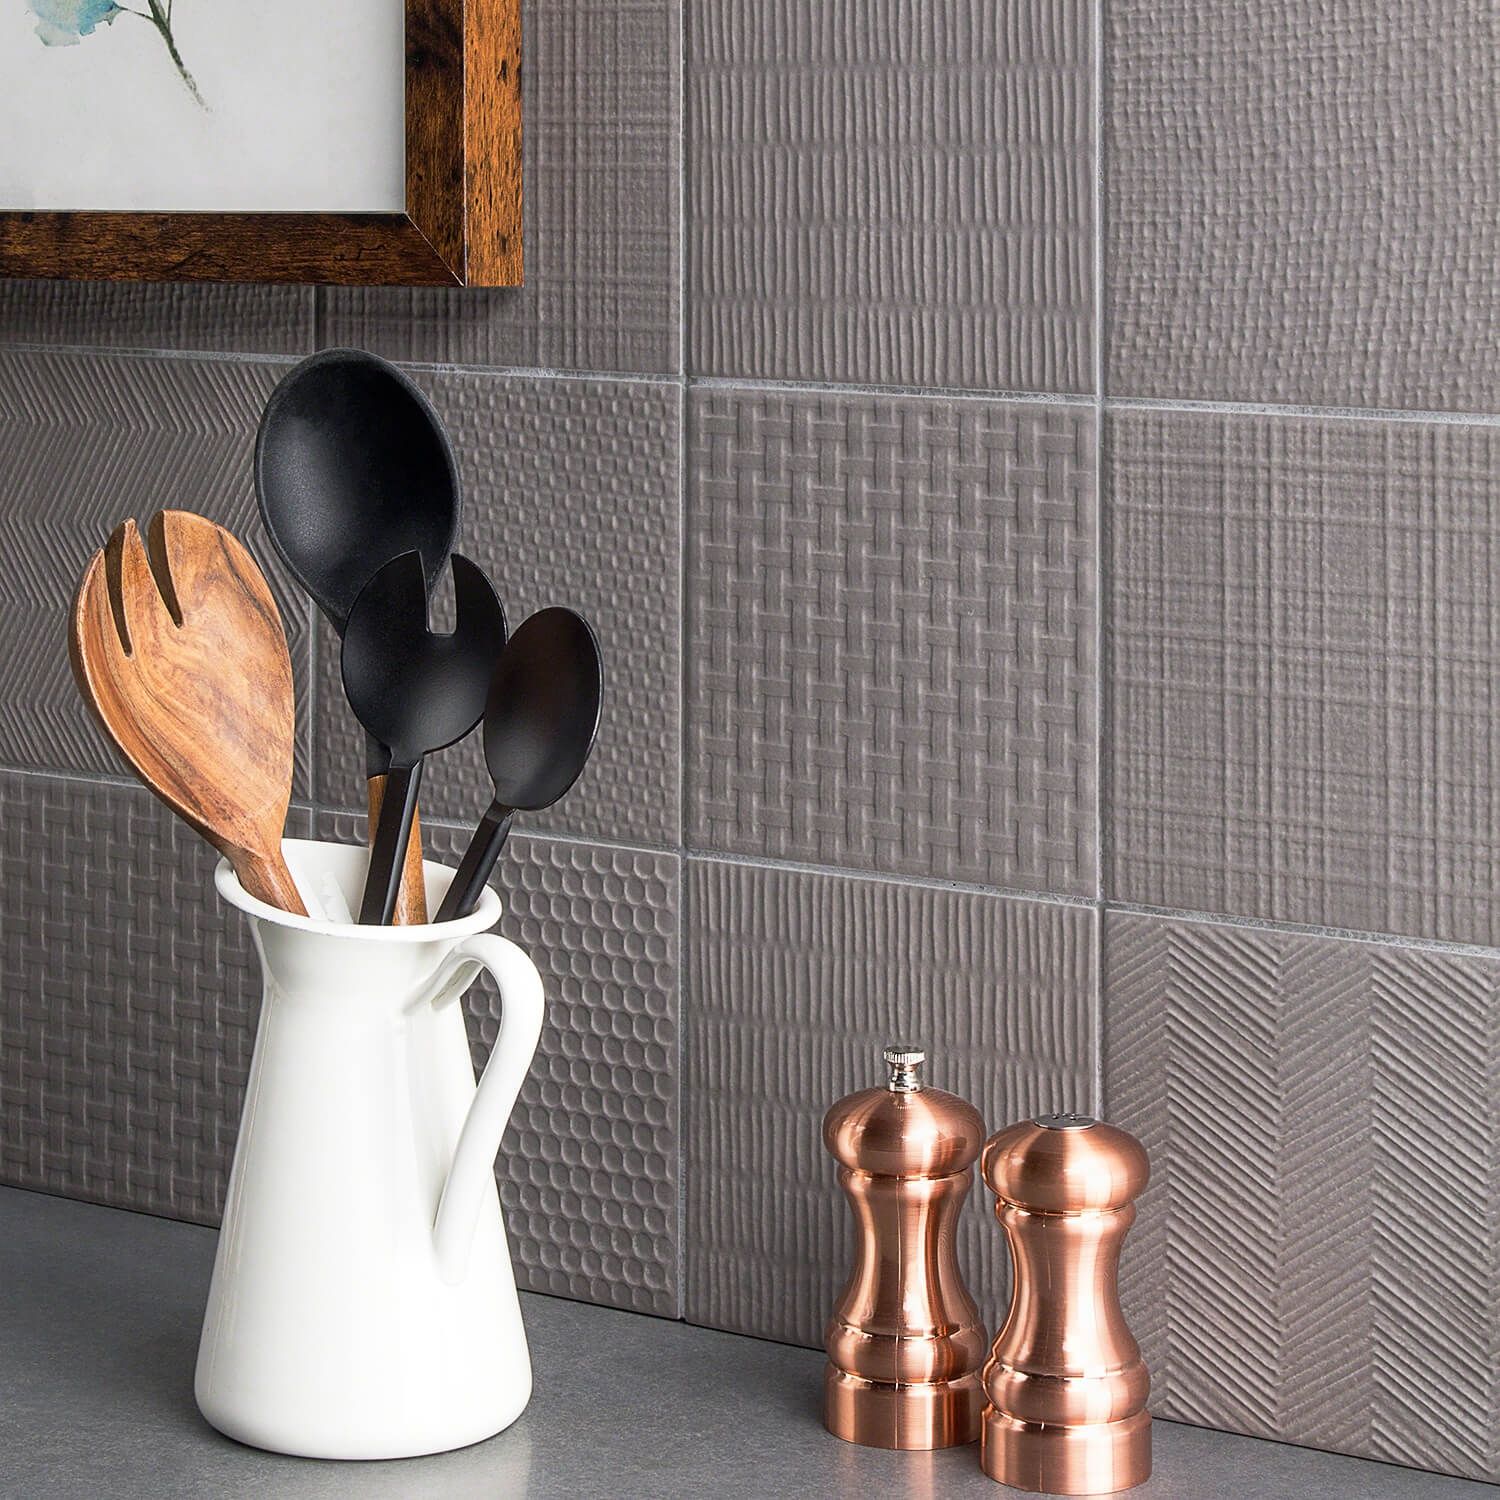 6×6 Kitchen Backsplash Tiles – Things In The Kitchen